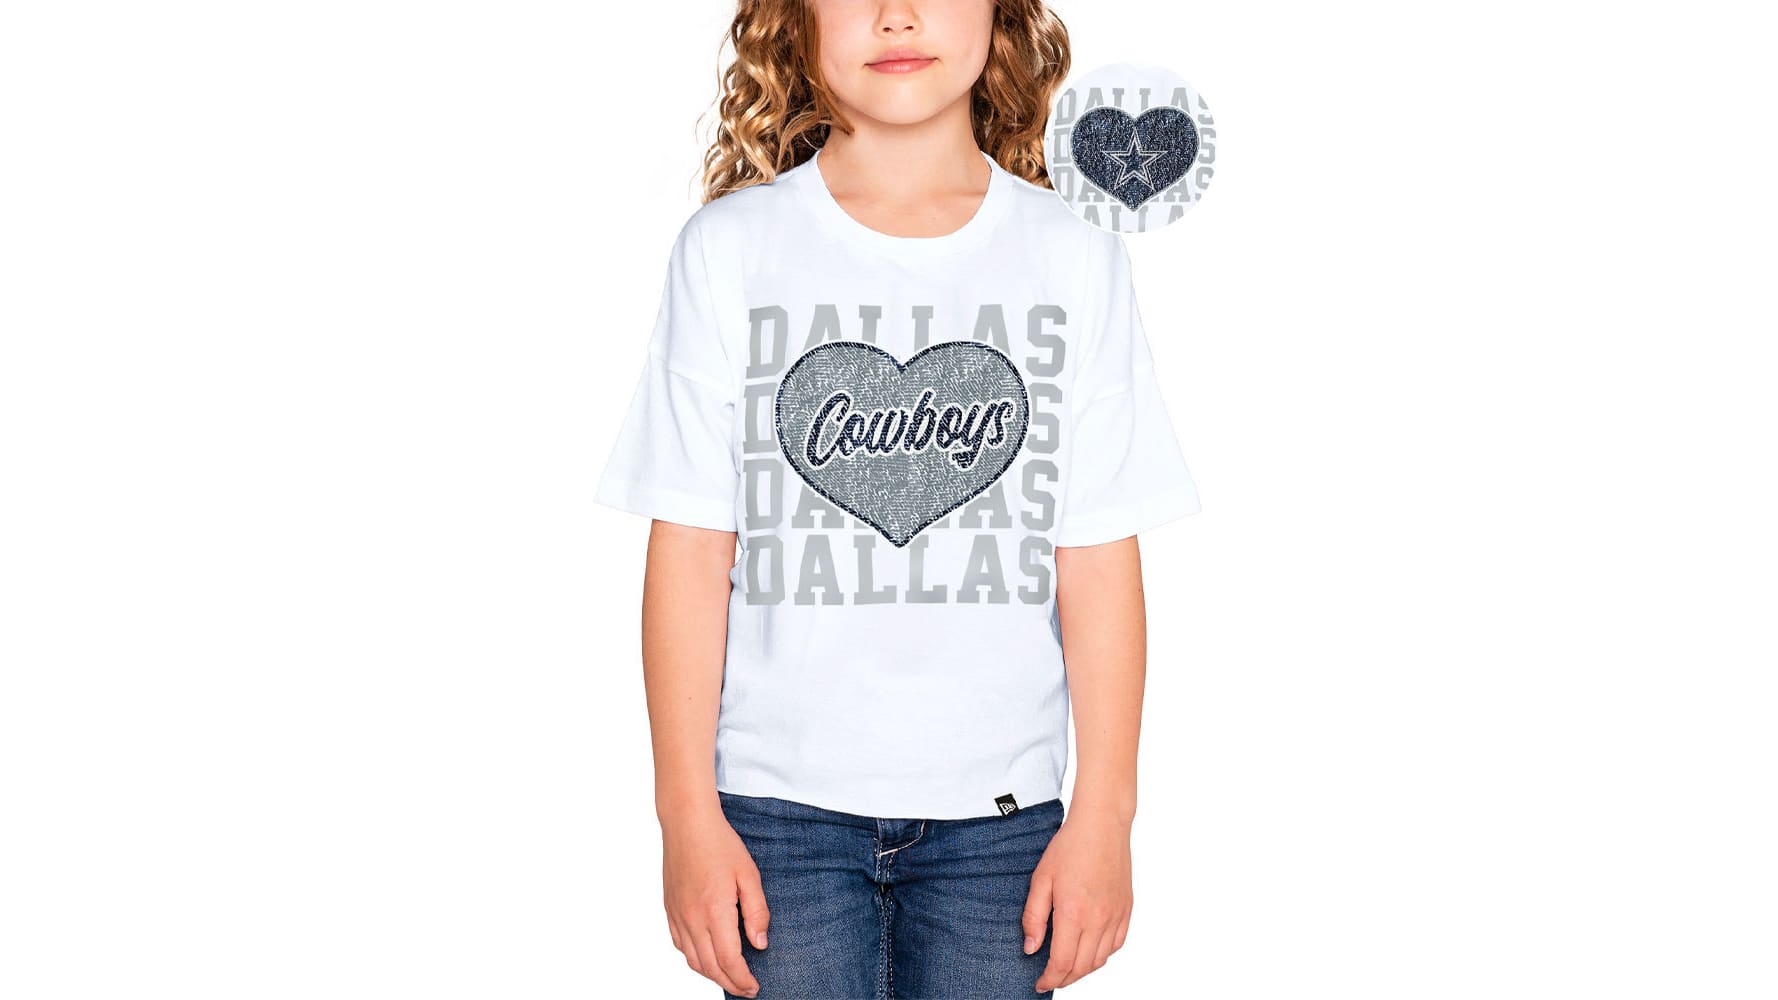 Dallas Cowboys Shirts For Girls Hot Cowboys Girls T-Shirt - Print